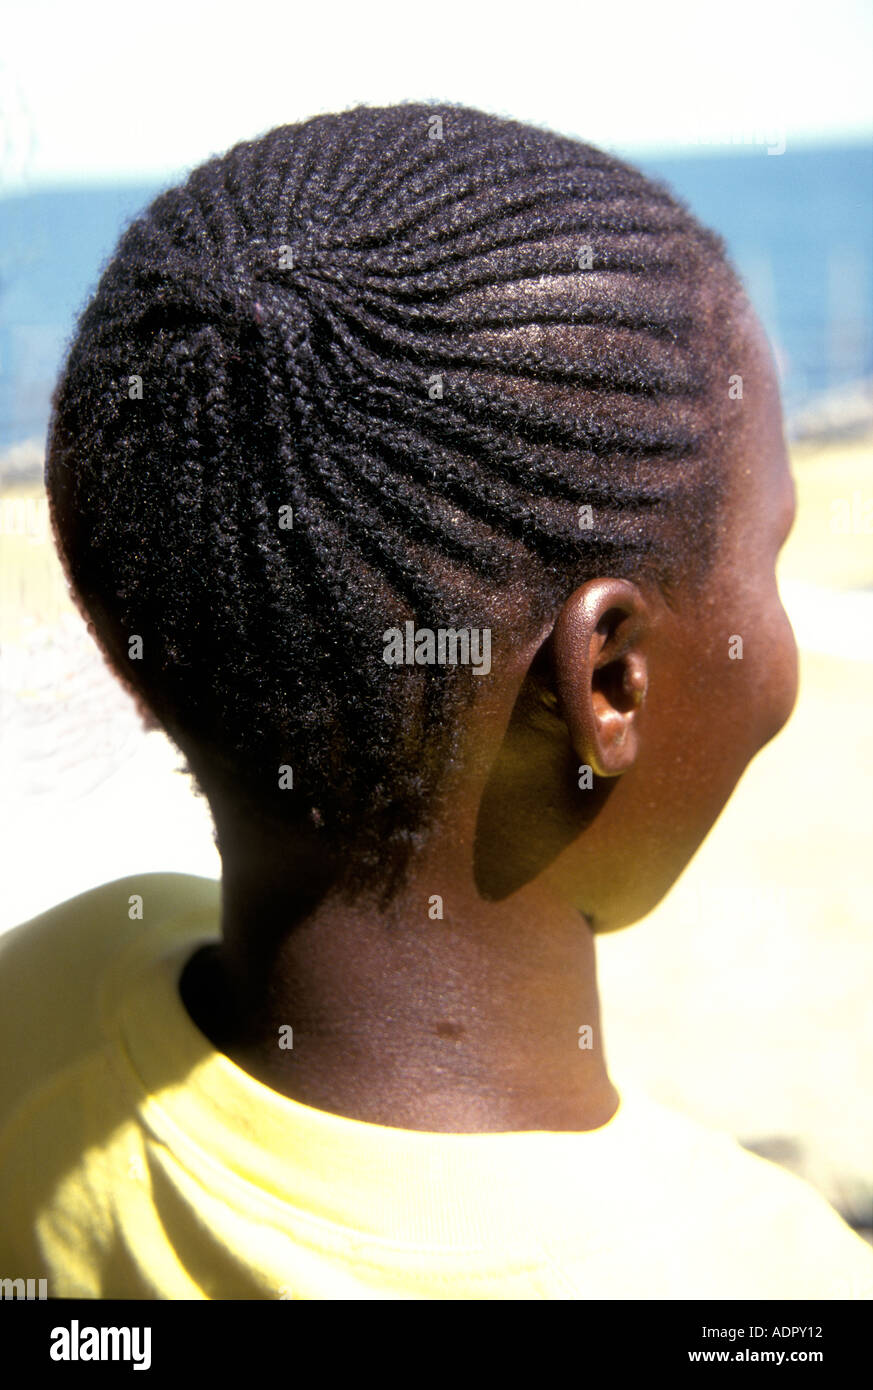 Luo woman s plaited hairstyle Rusinga Island Lake Victoria Kenya East Africa  Stock Photo - Alamy